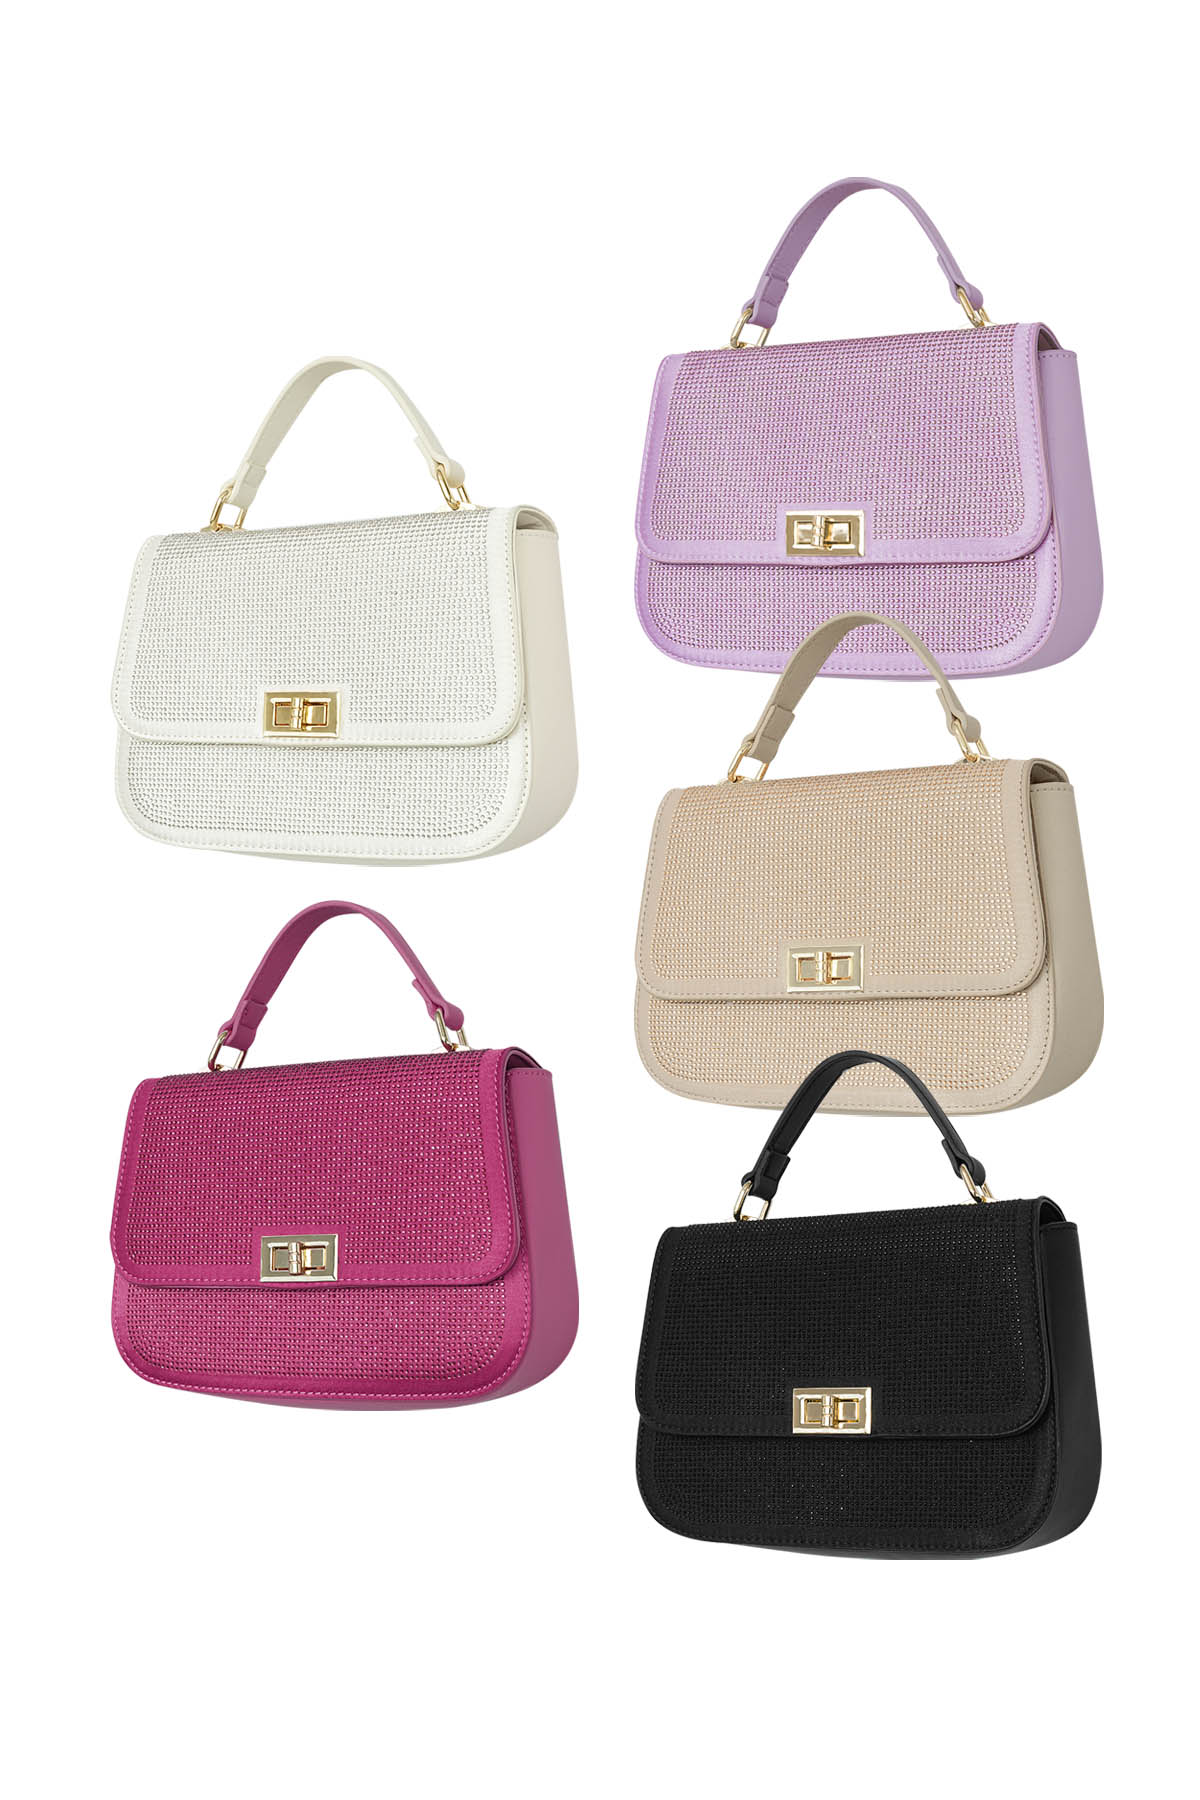 Handbag glamor - purple PU h5 Picture4